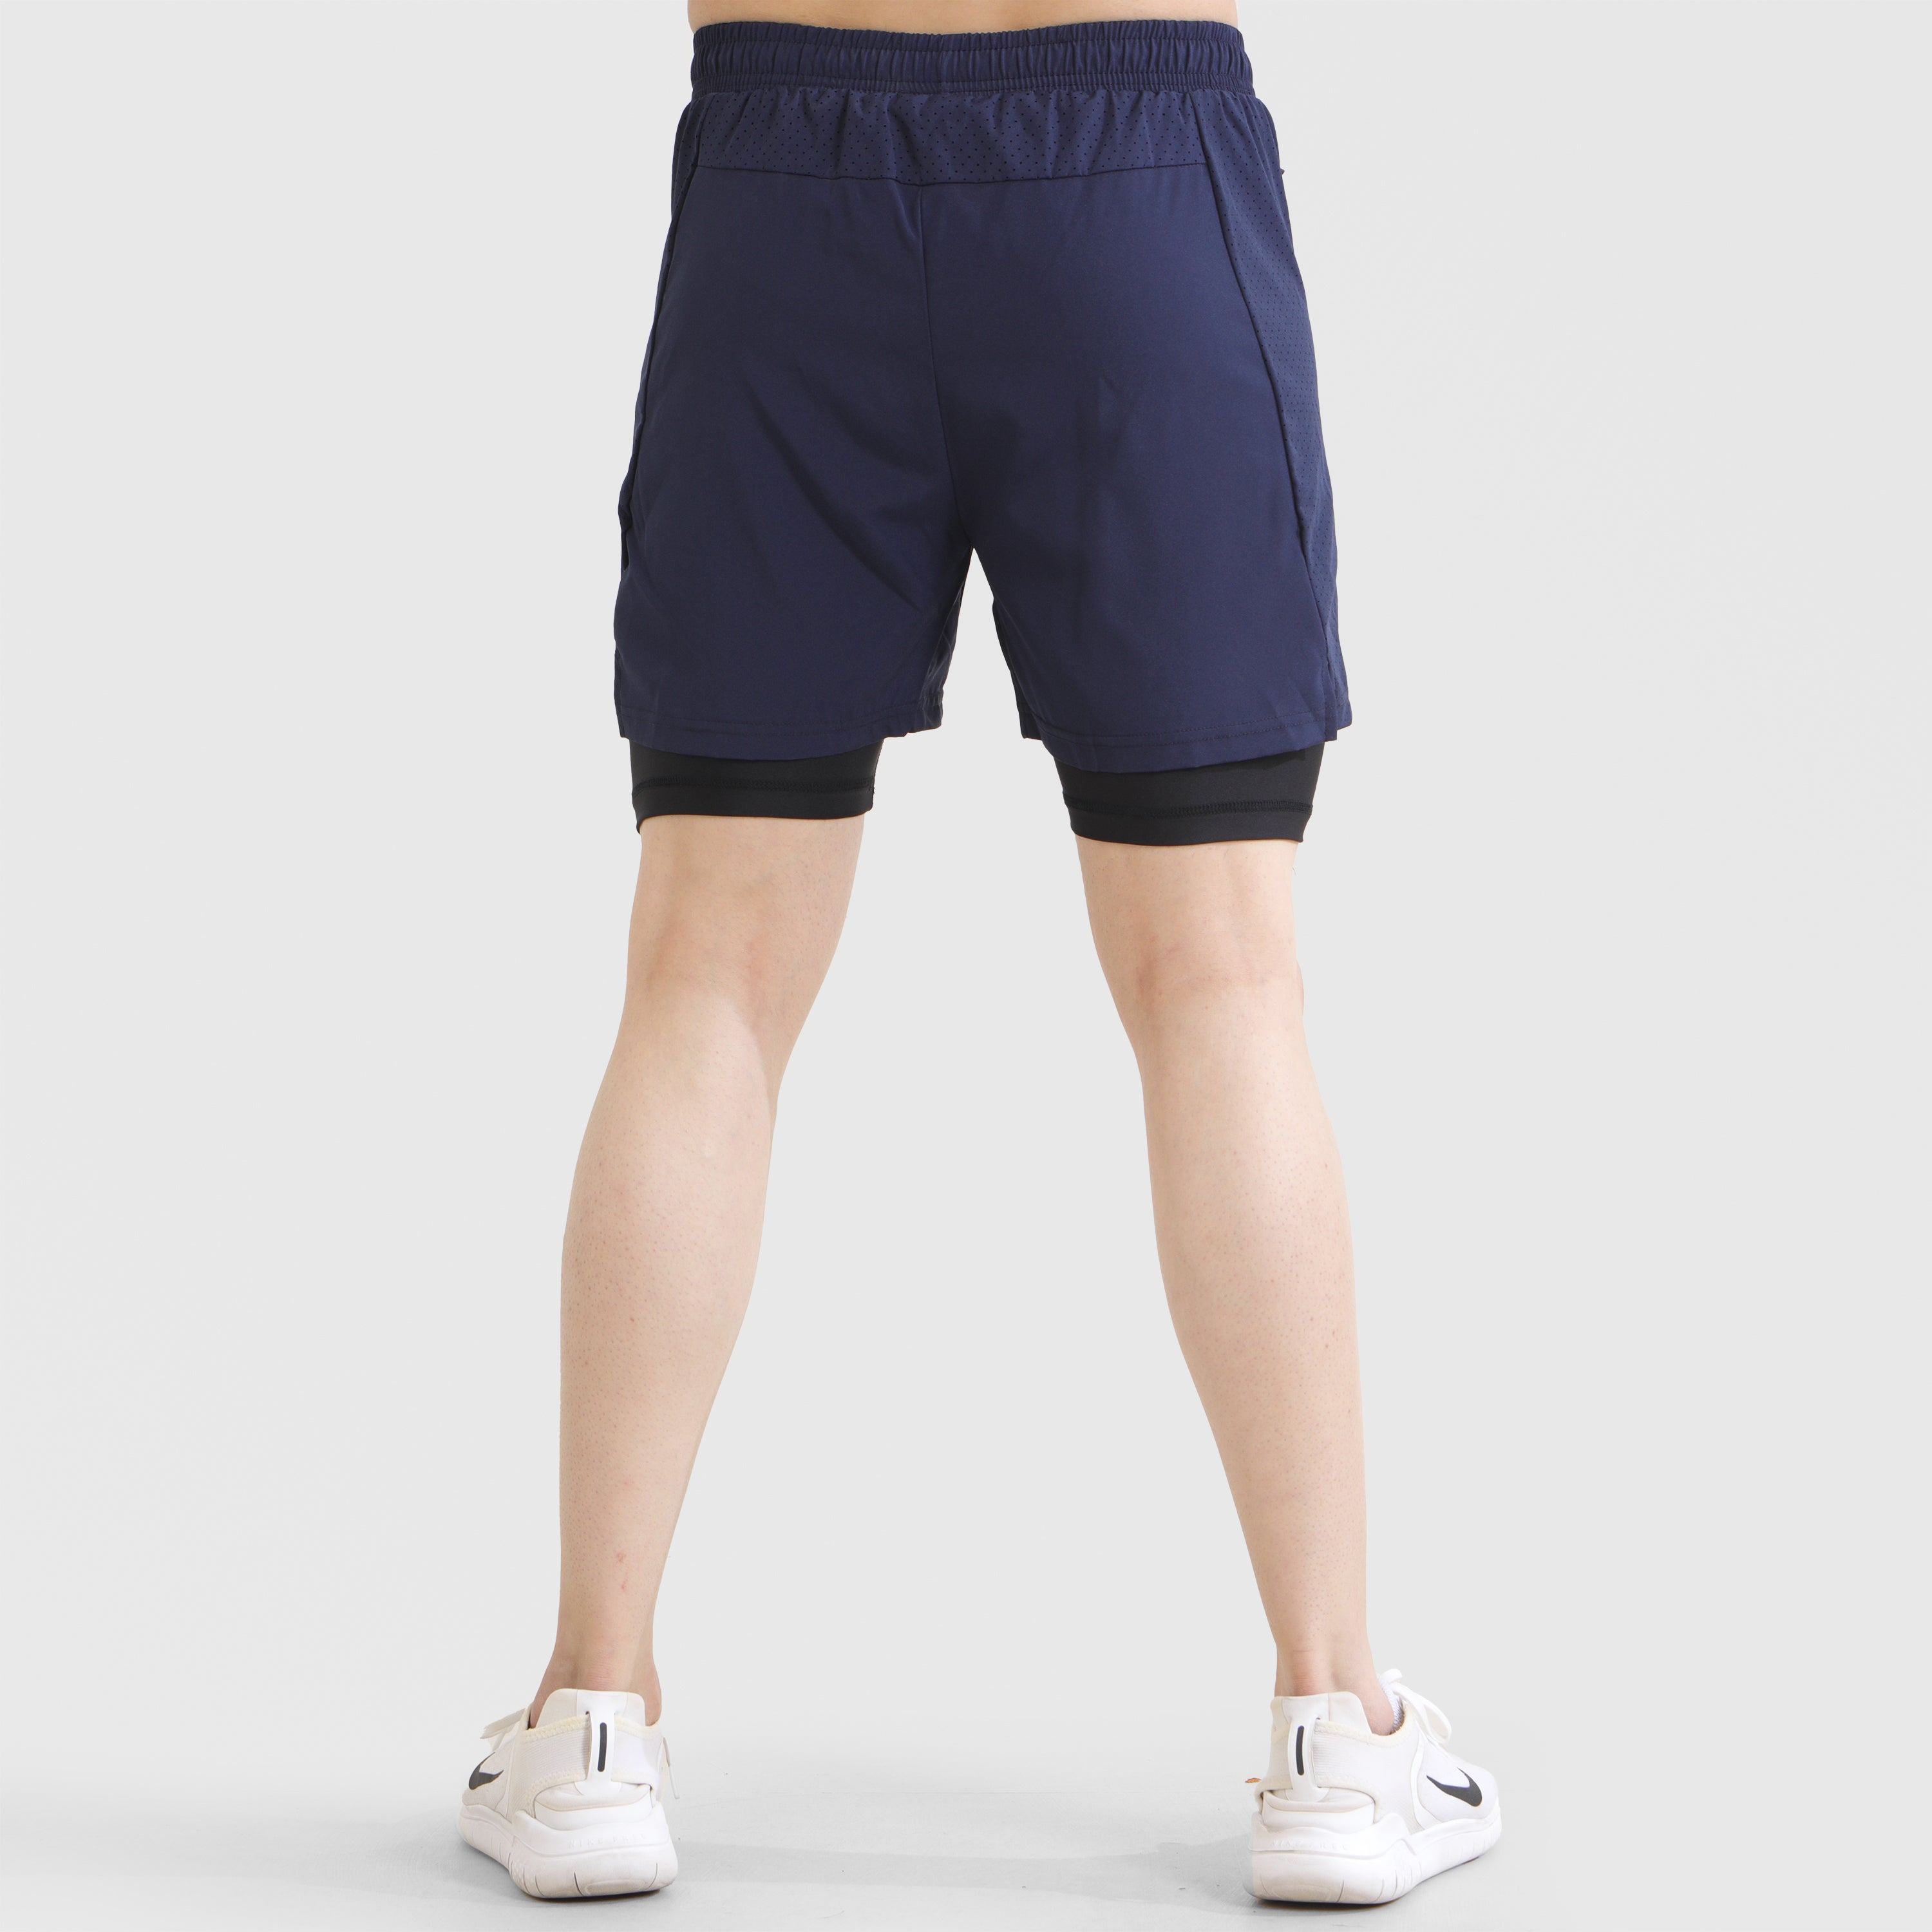 Laser Grip Shorts (Navy)